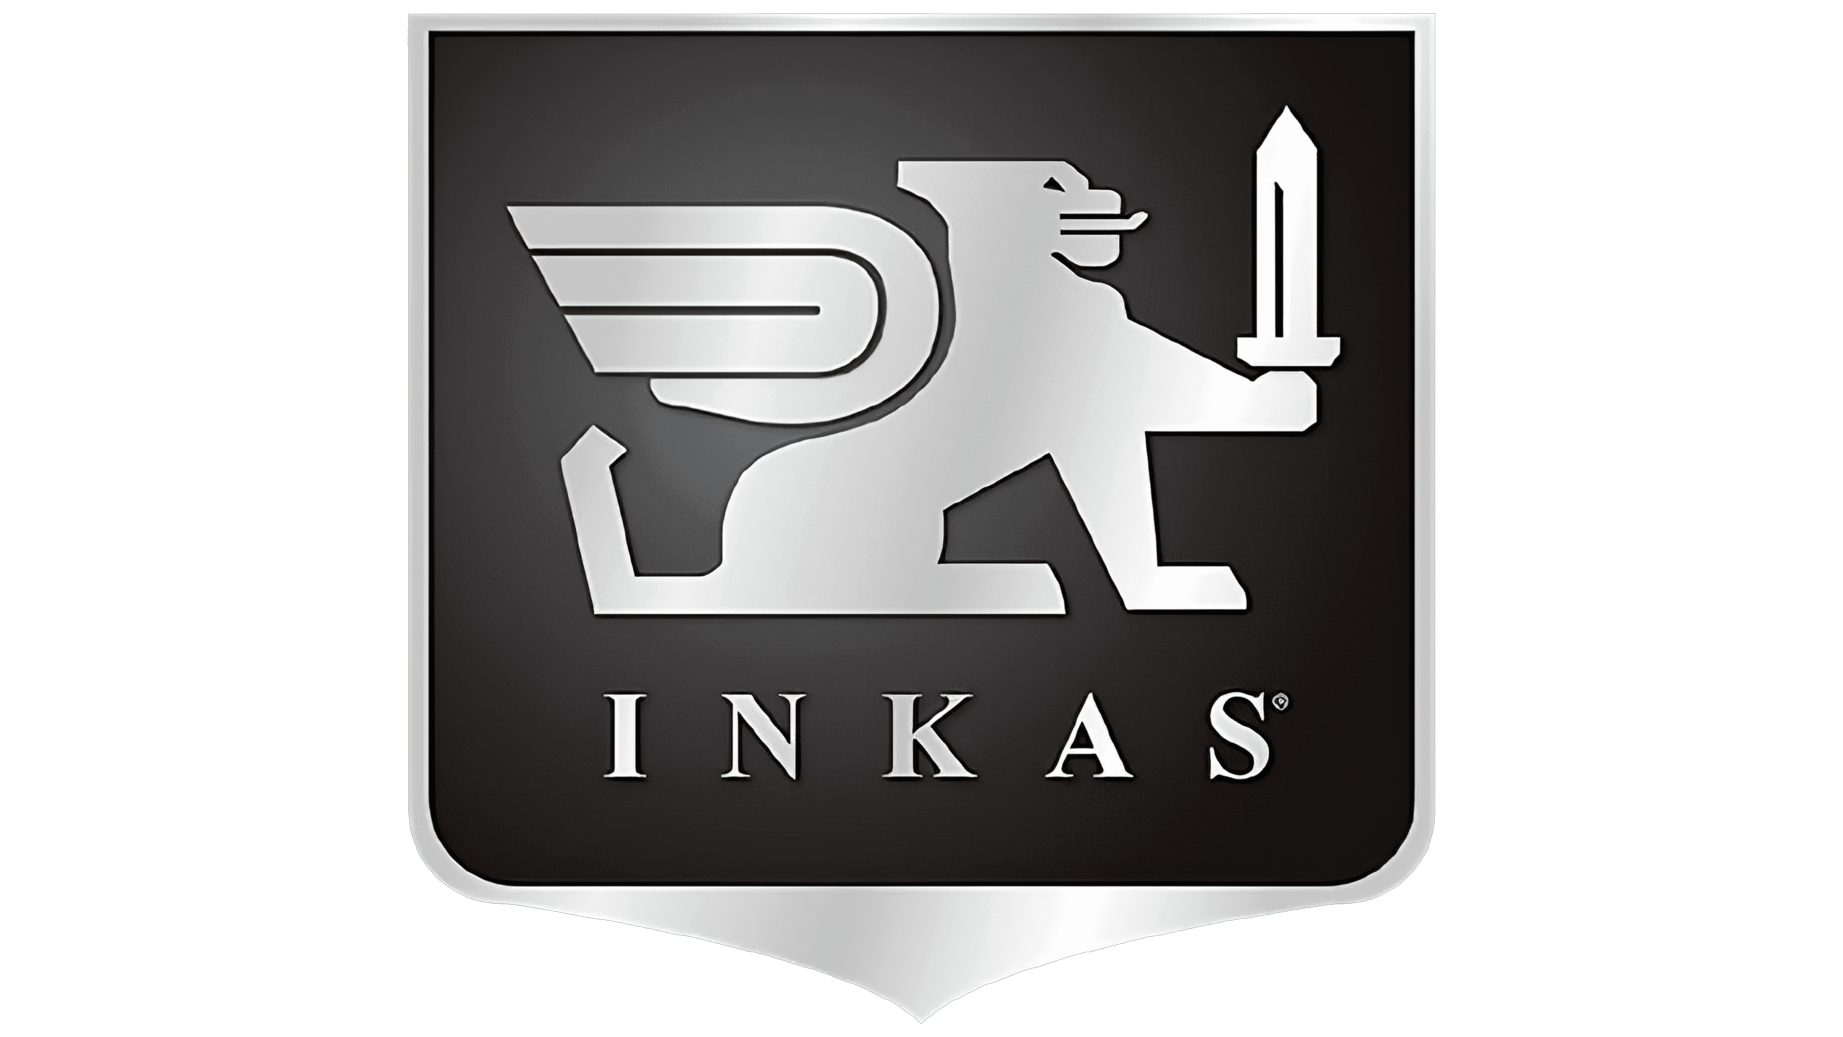 Inkas armored vehicle manufacturing sign